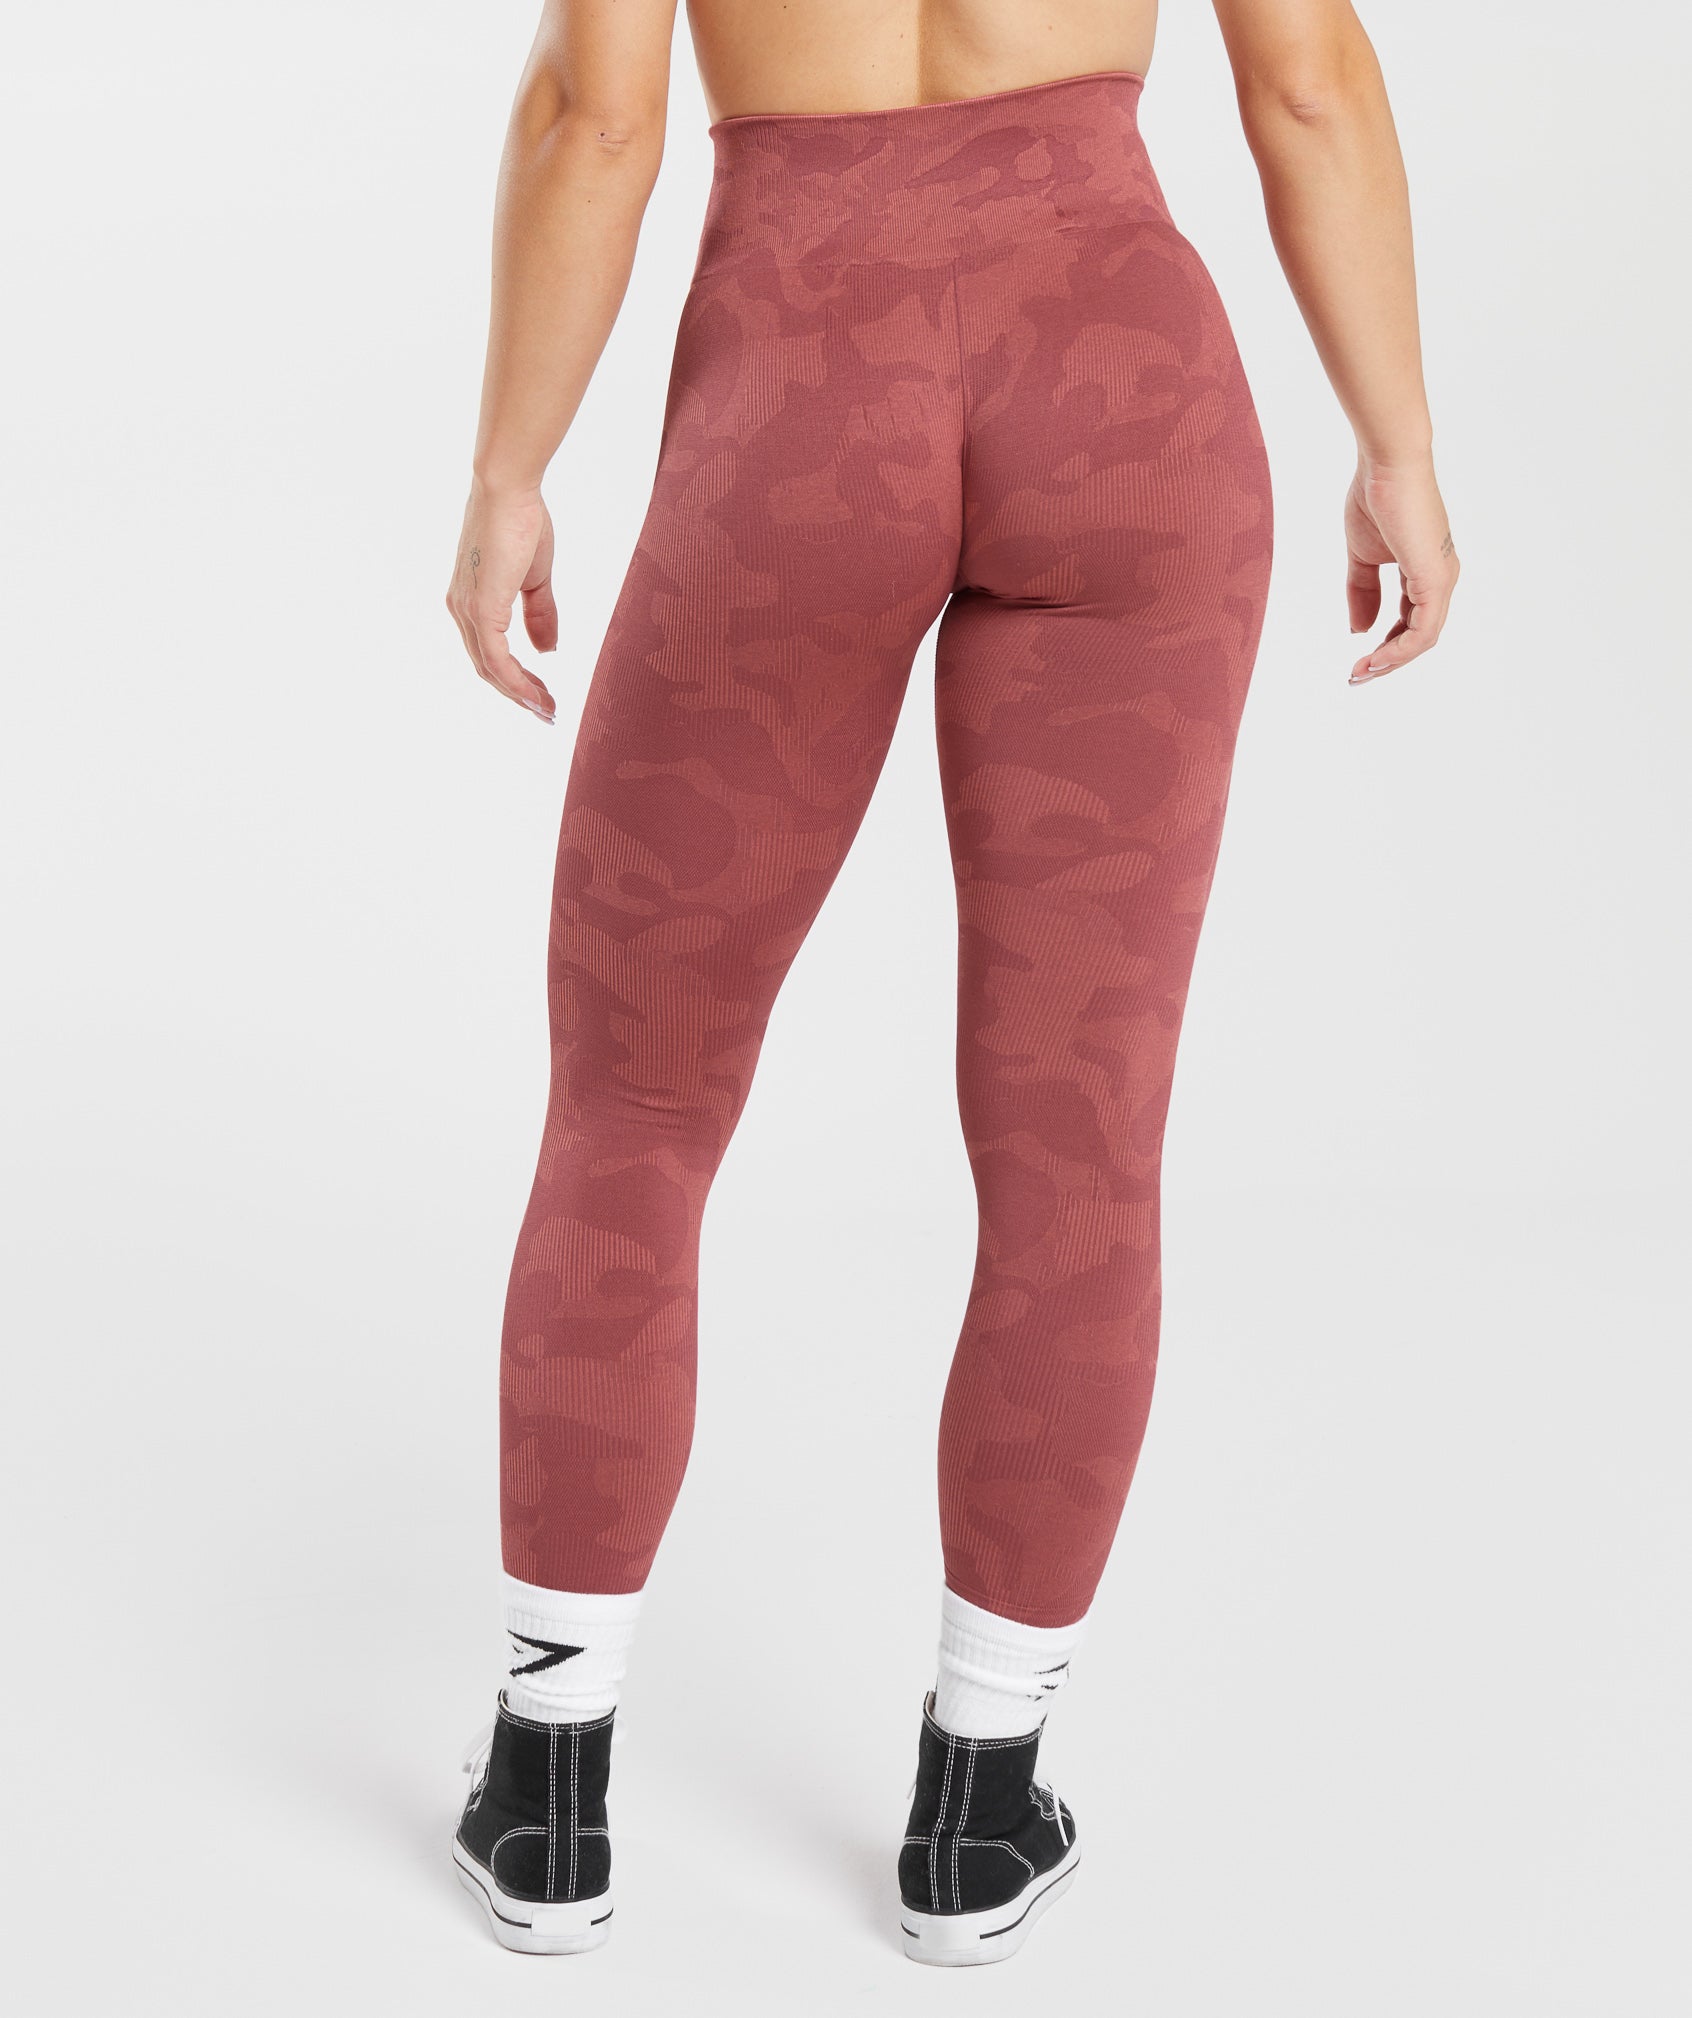 QRIC Women's Camo Seamless Leggings High Waist Workout Pants Tummy Control  Slim Stretch Gym Yoga Pants 